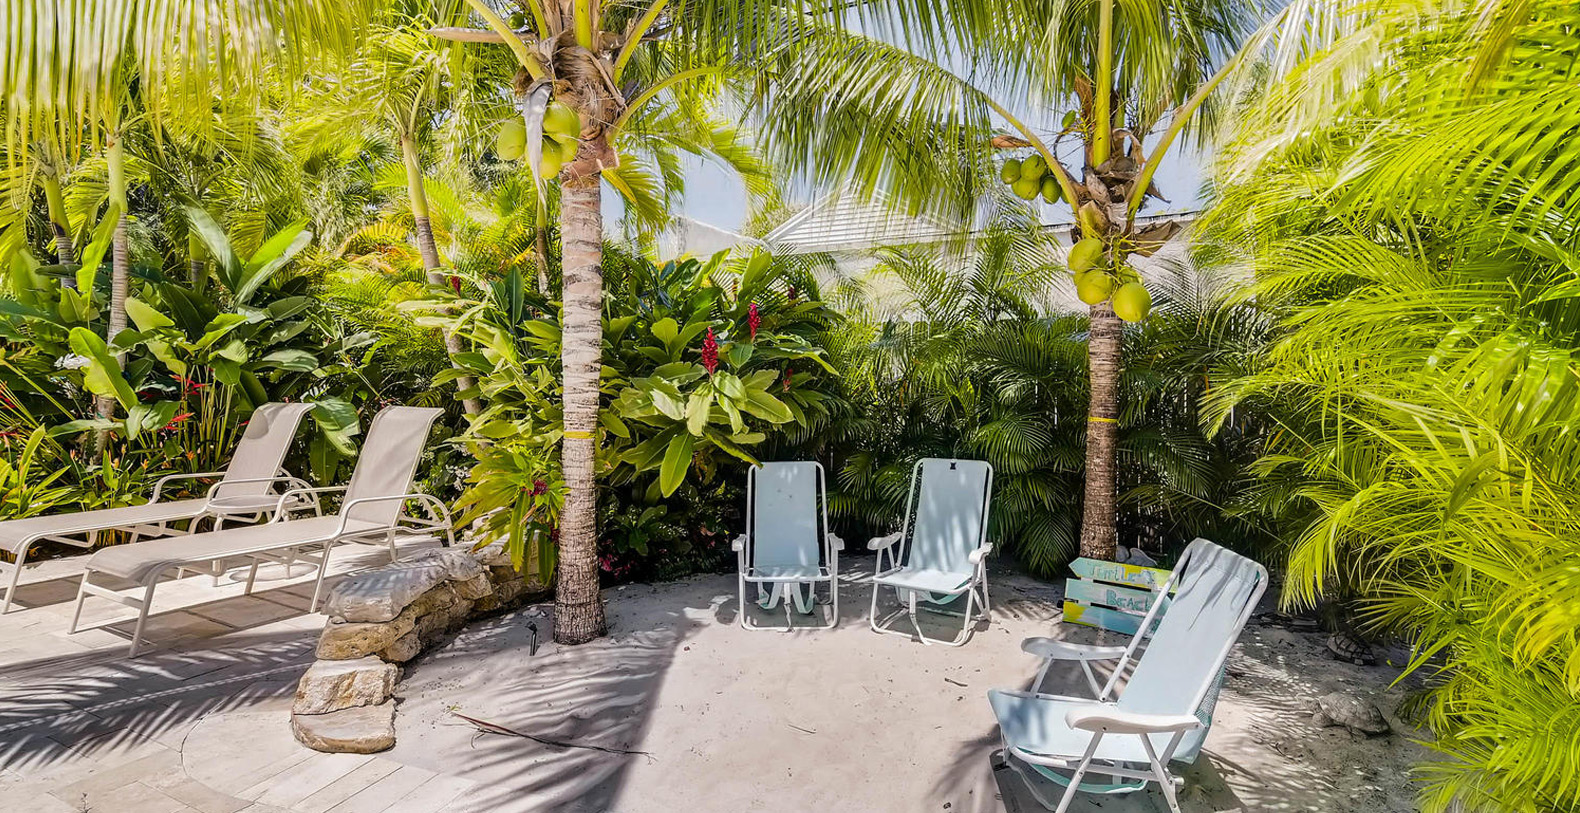 Villa Abigail West Palm Beach, Florida, Vacation Rentals